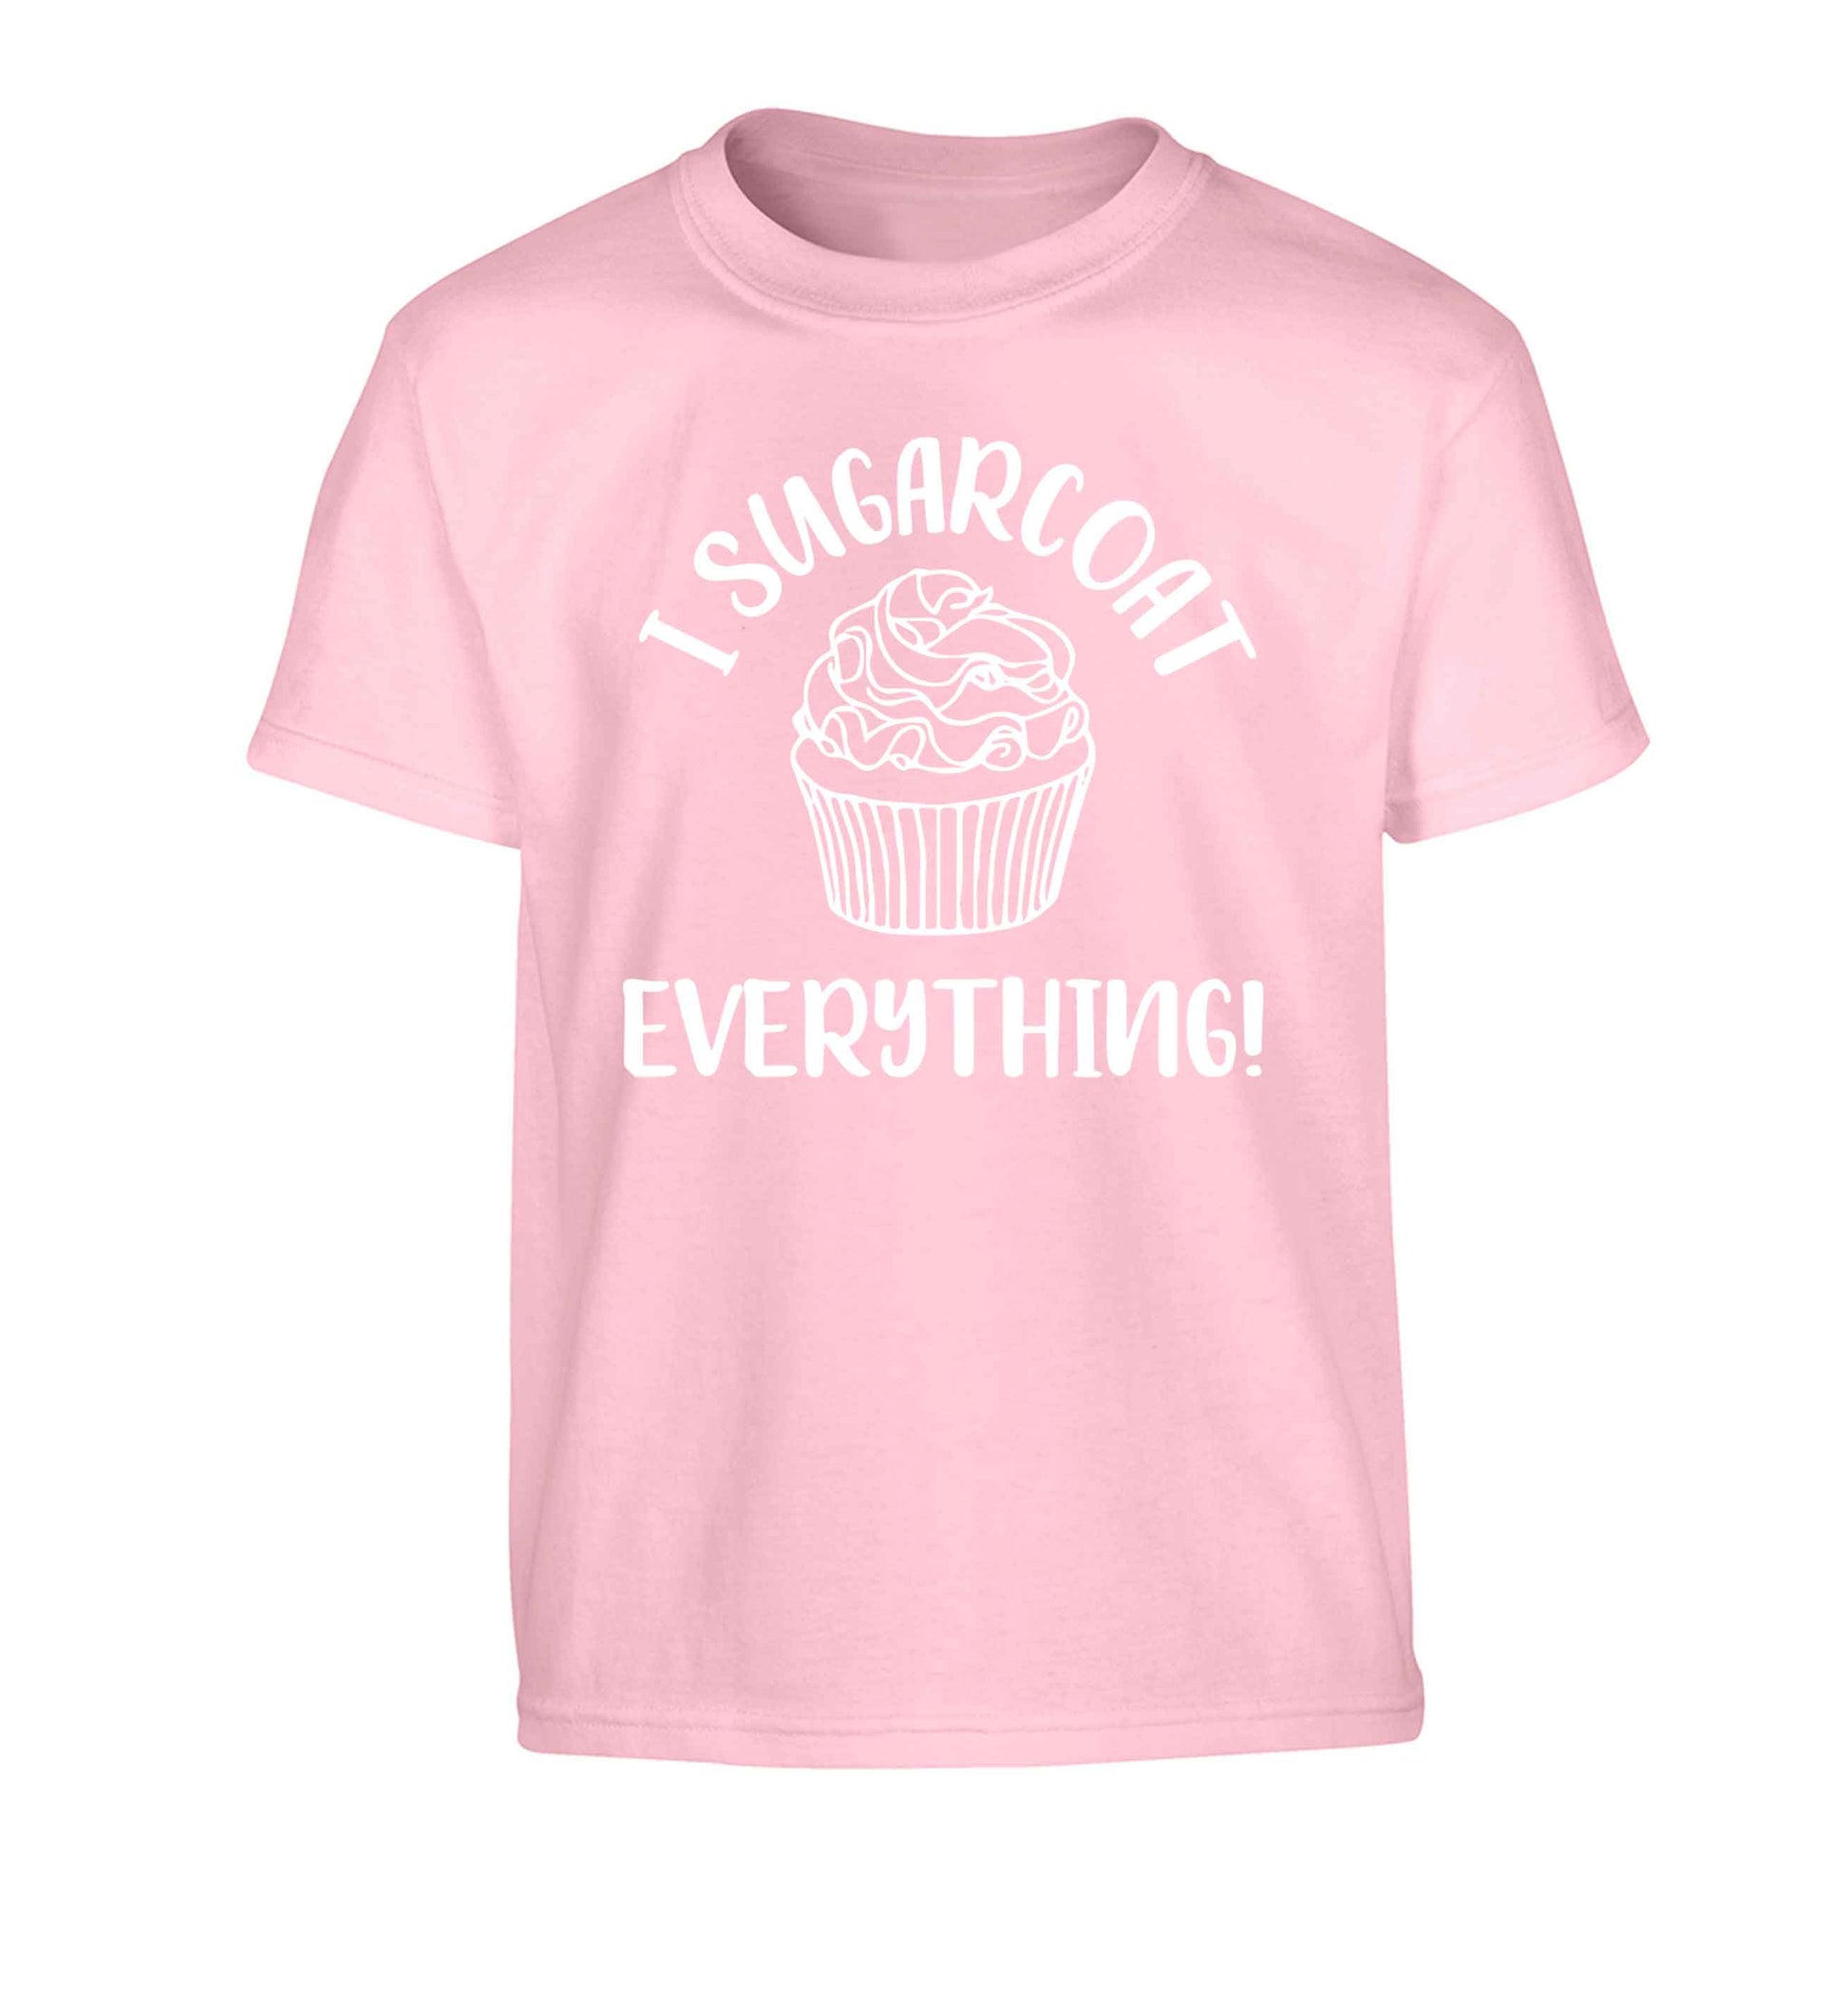 I sugarcoat everything Children's light pink Tshirt 12-13 Years